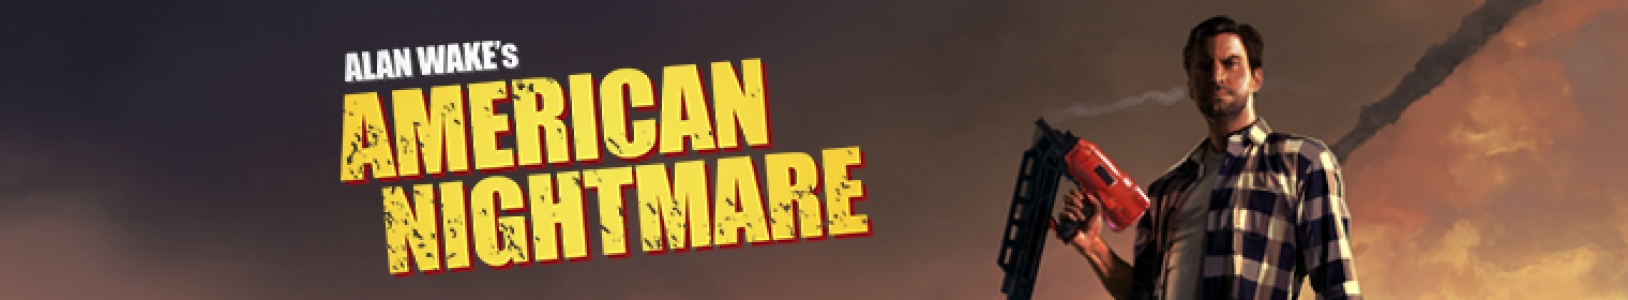 Alan Wake's American Nightmare banner